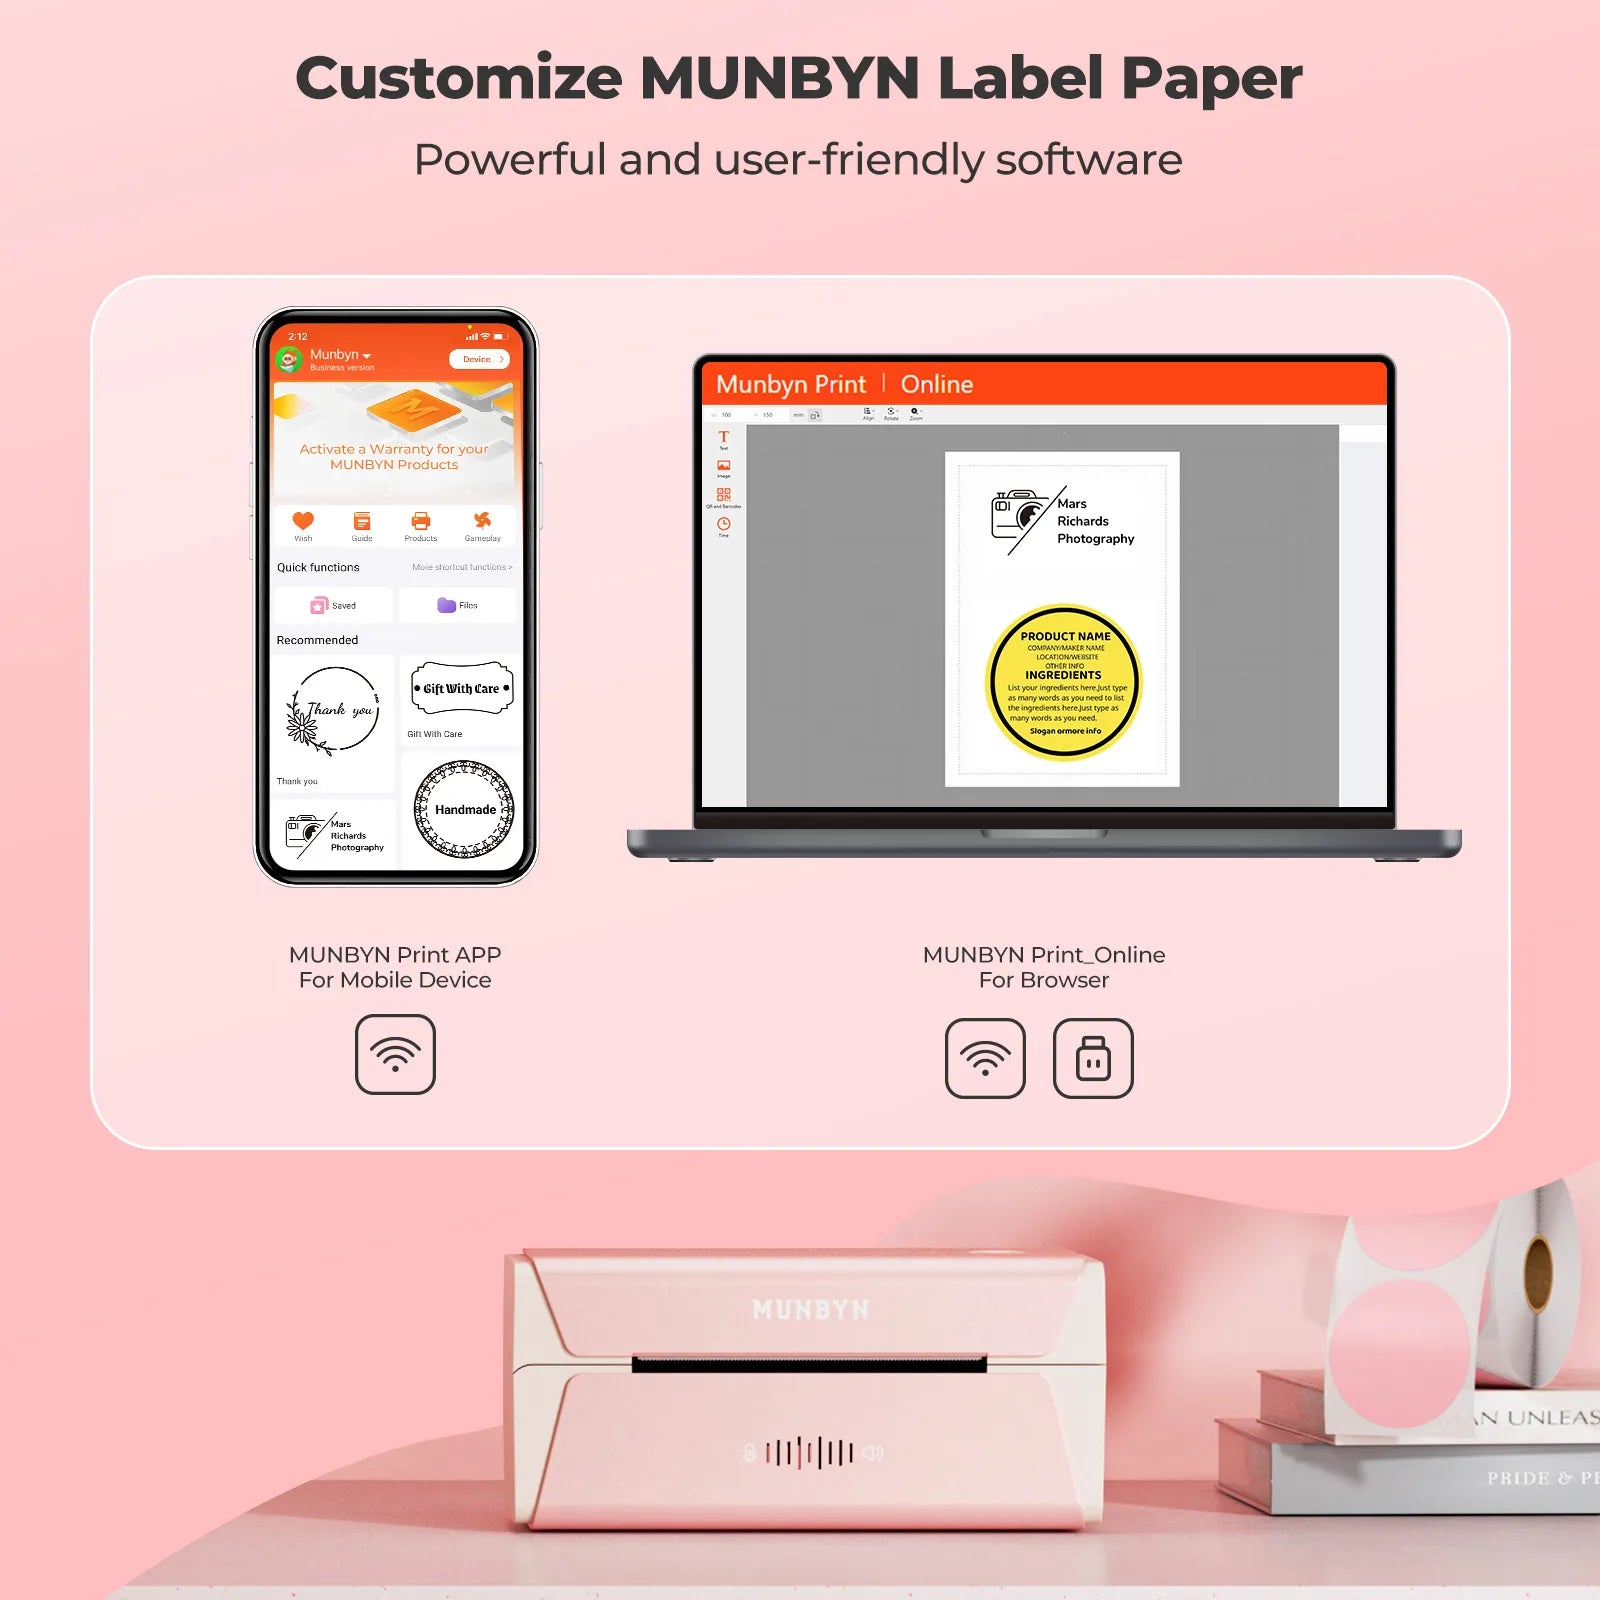 MUNBYN Wireless Label Printer P44S can print custom labels using  MUNBYN Print softwares.